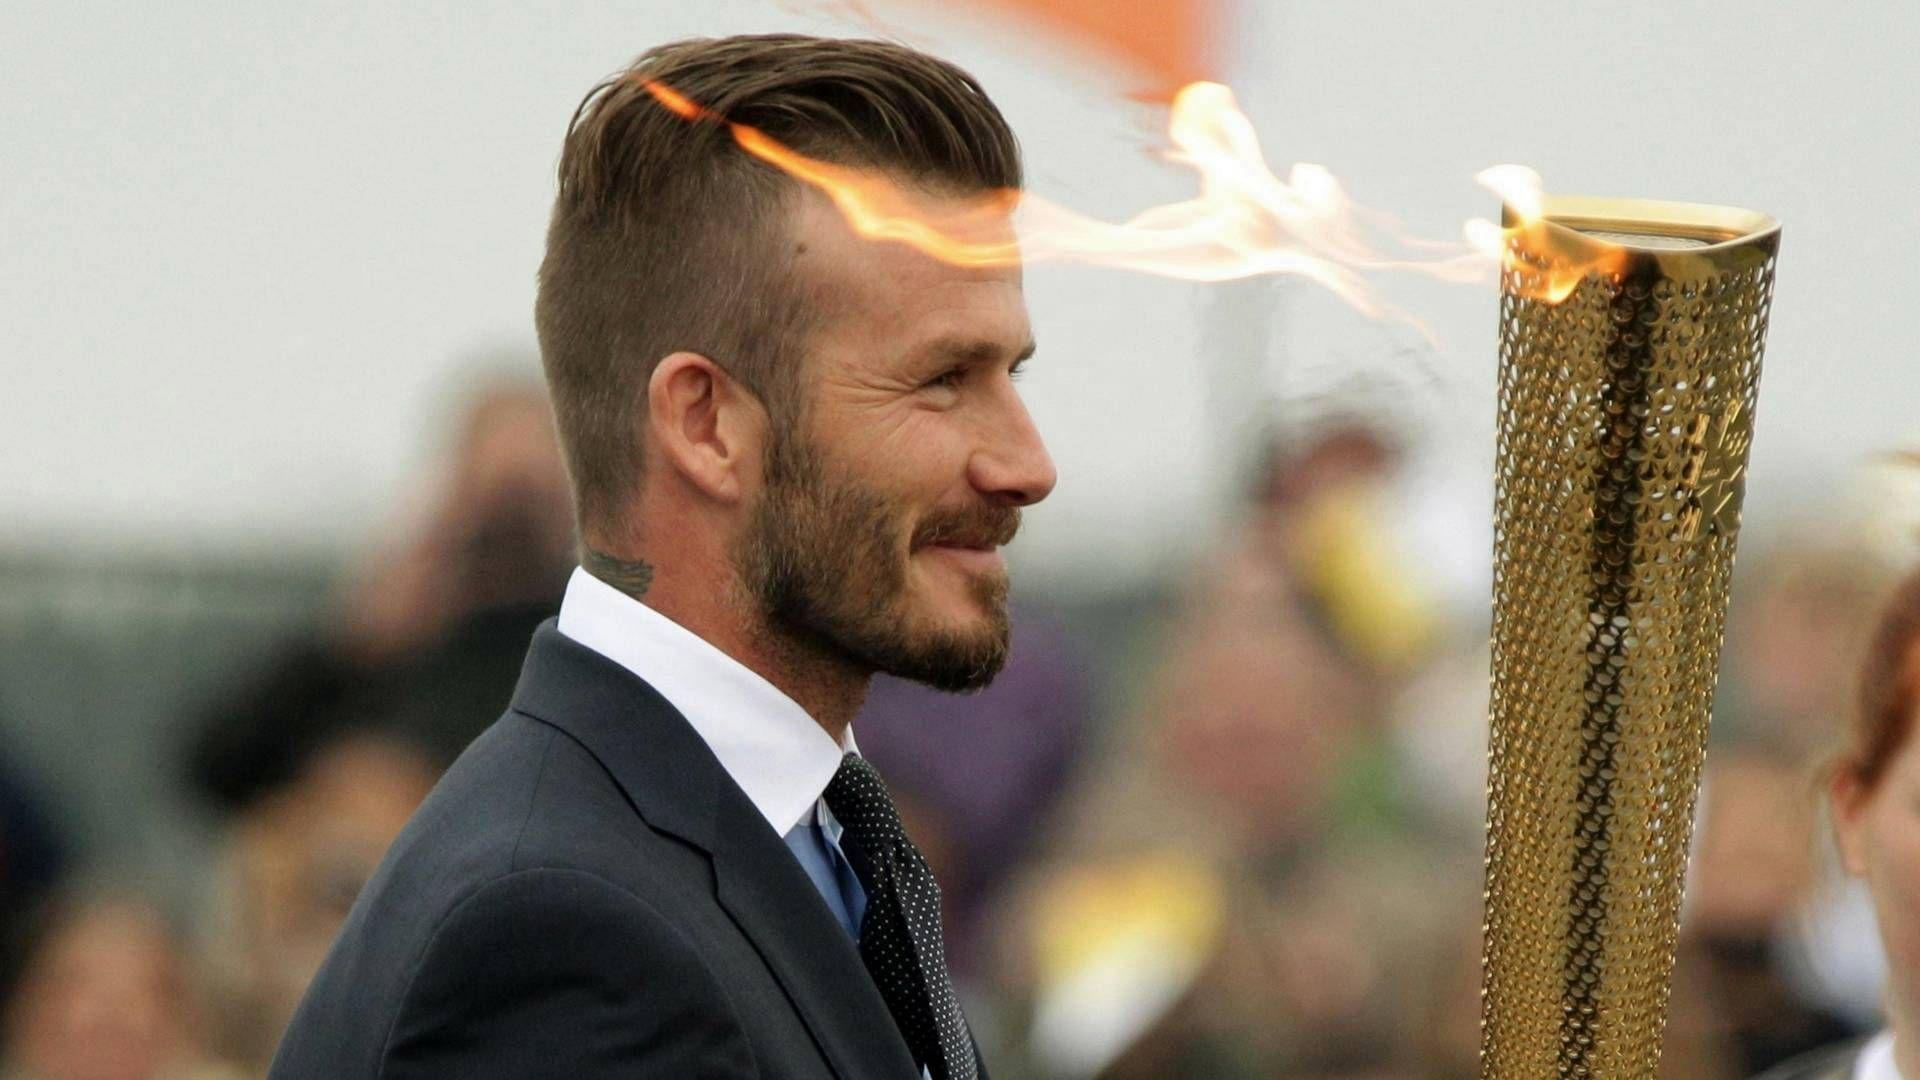 New David Beckham Hairstyle 2013 Full HD Wallpaper. Just